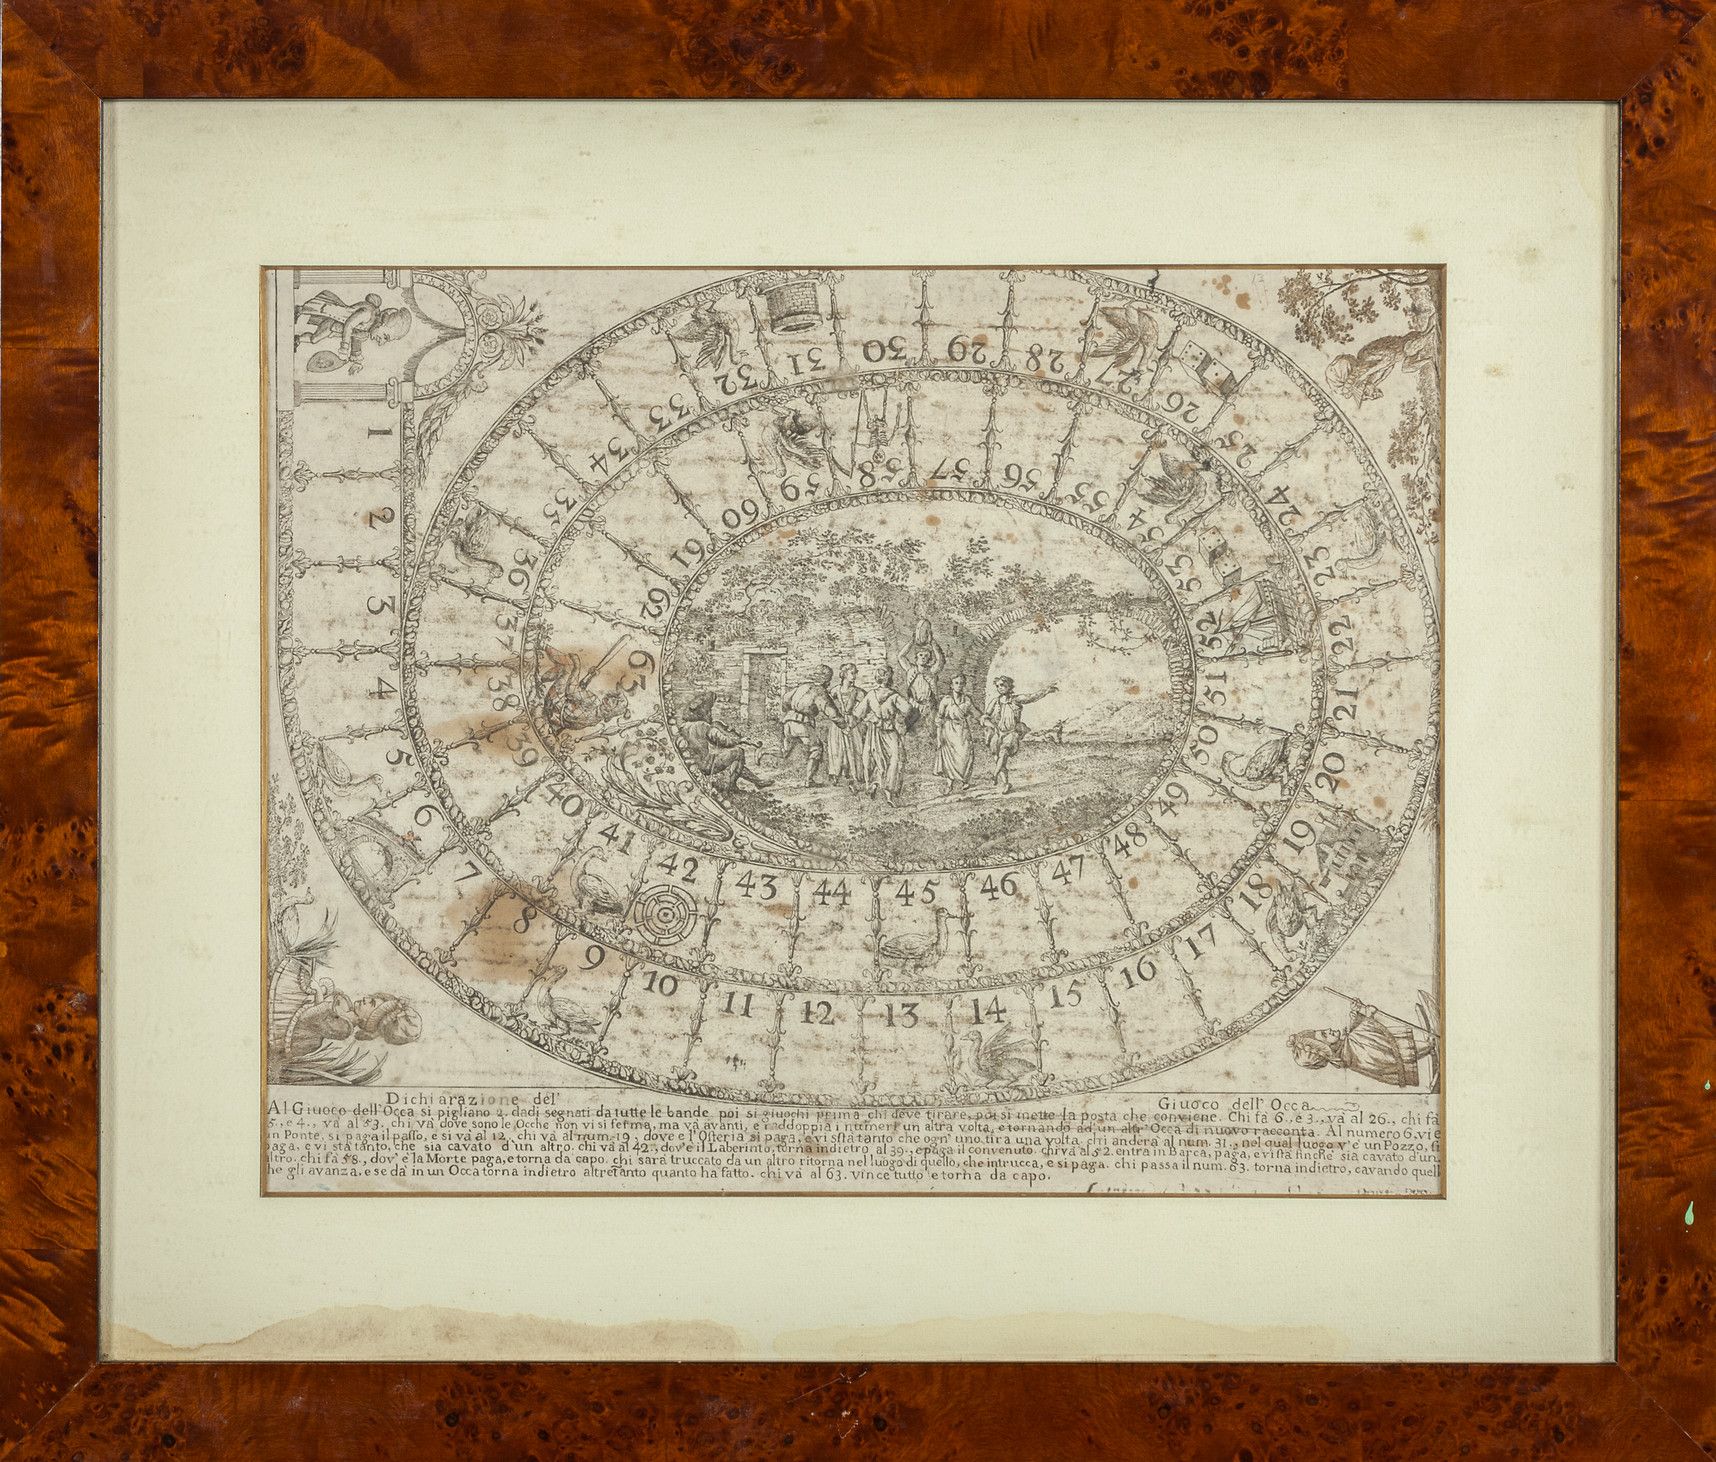 OGGETTISTICA Declaration of the goose game Italy-Venice 18th century
cm. 46x36